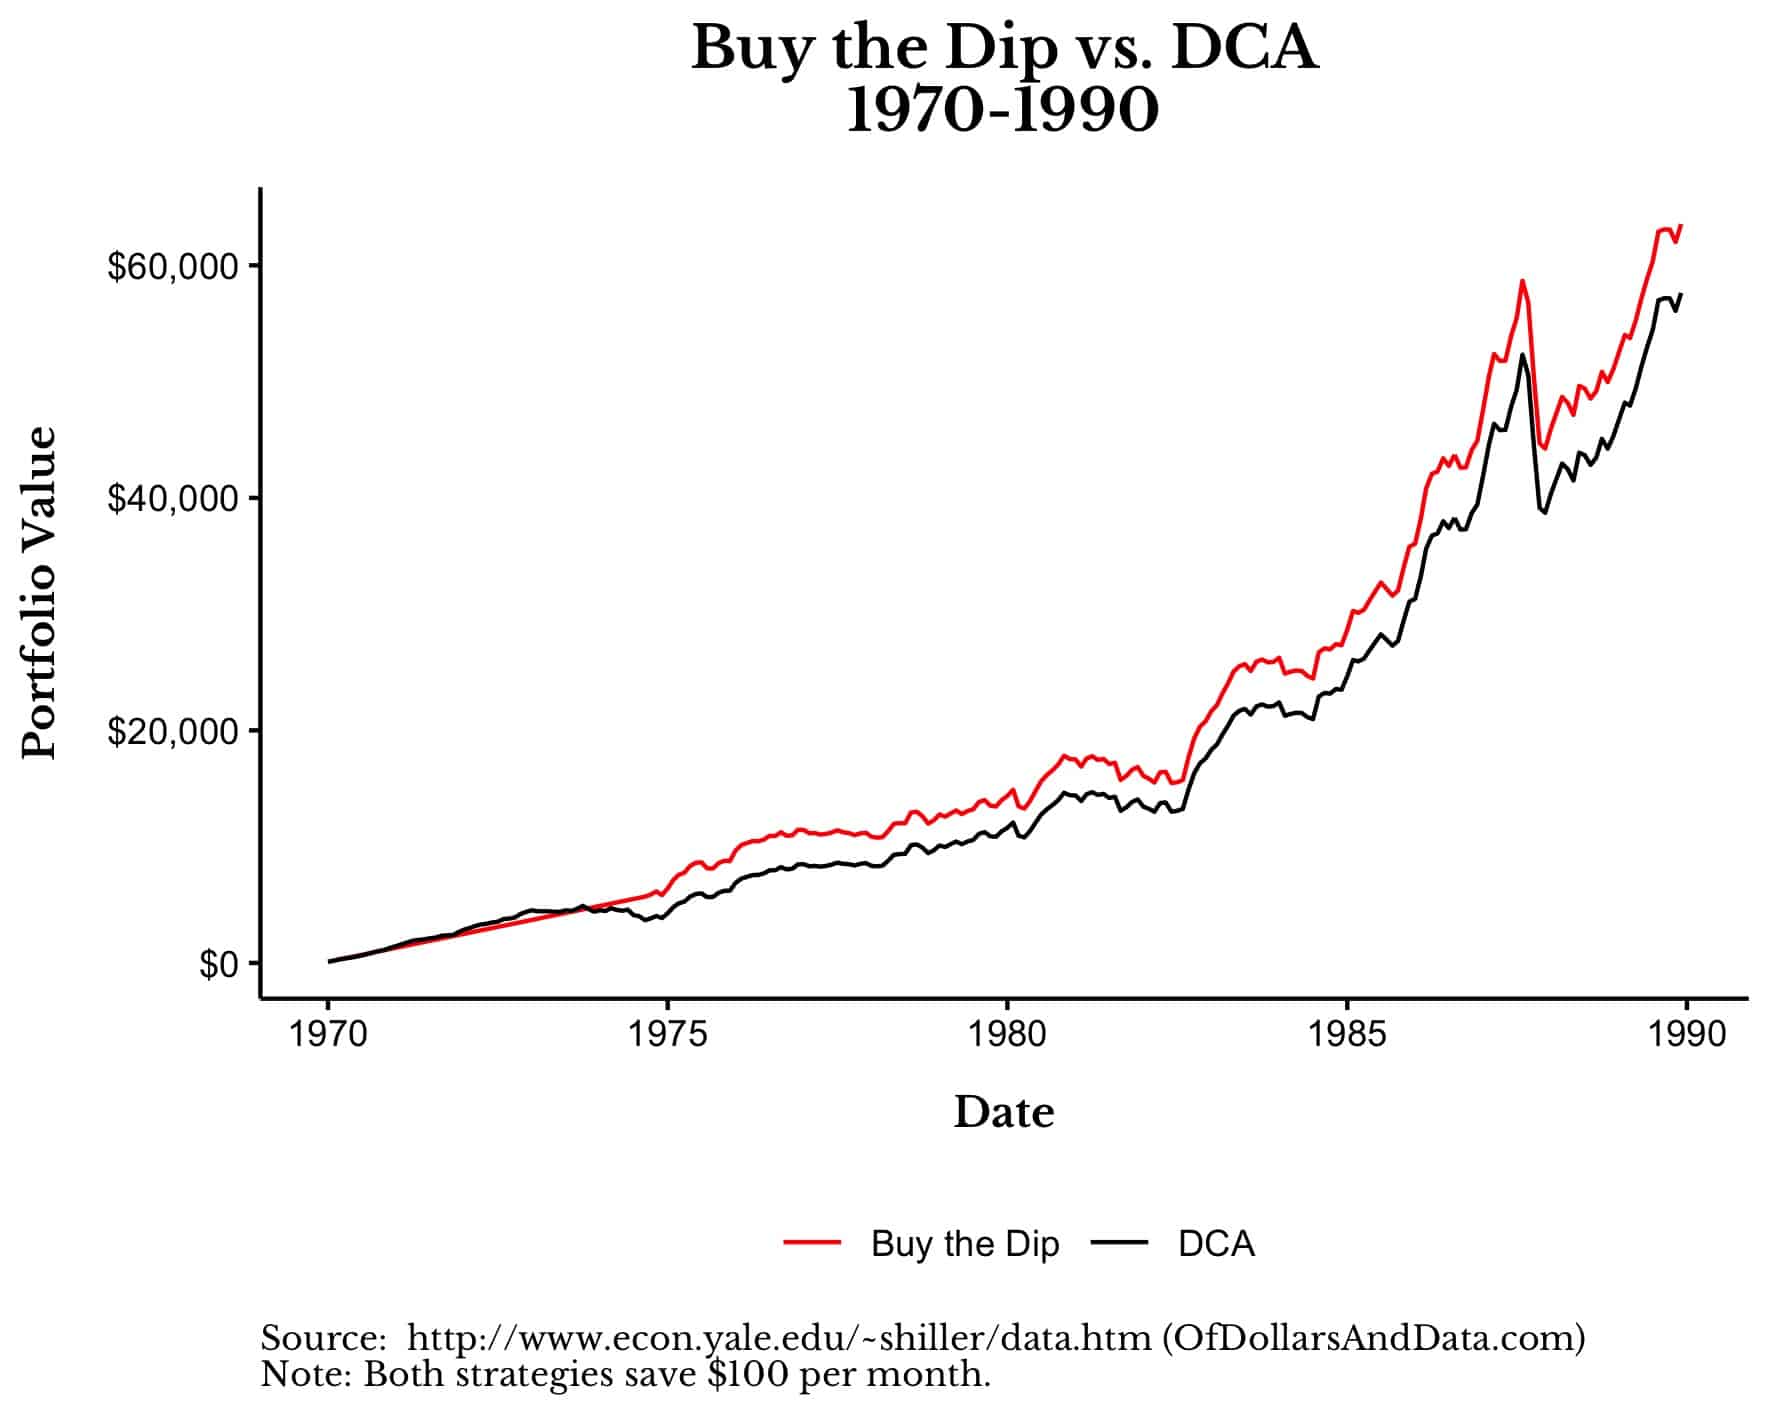 Buy the dip vs dollar cost averaging, 1970-1990